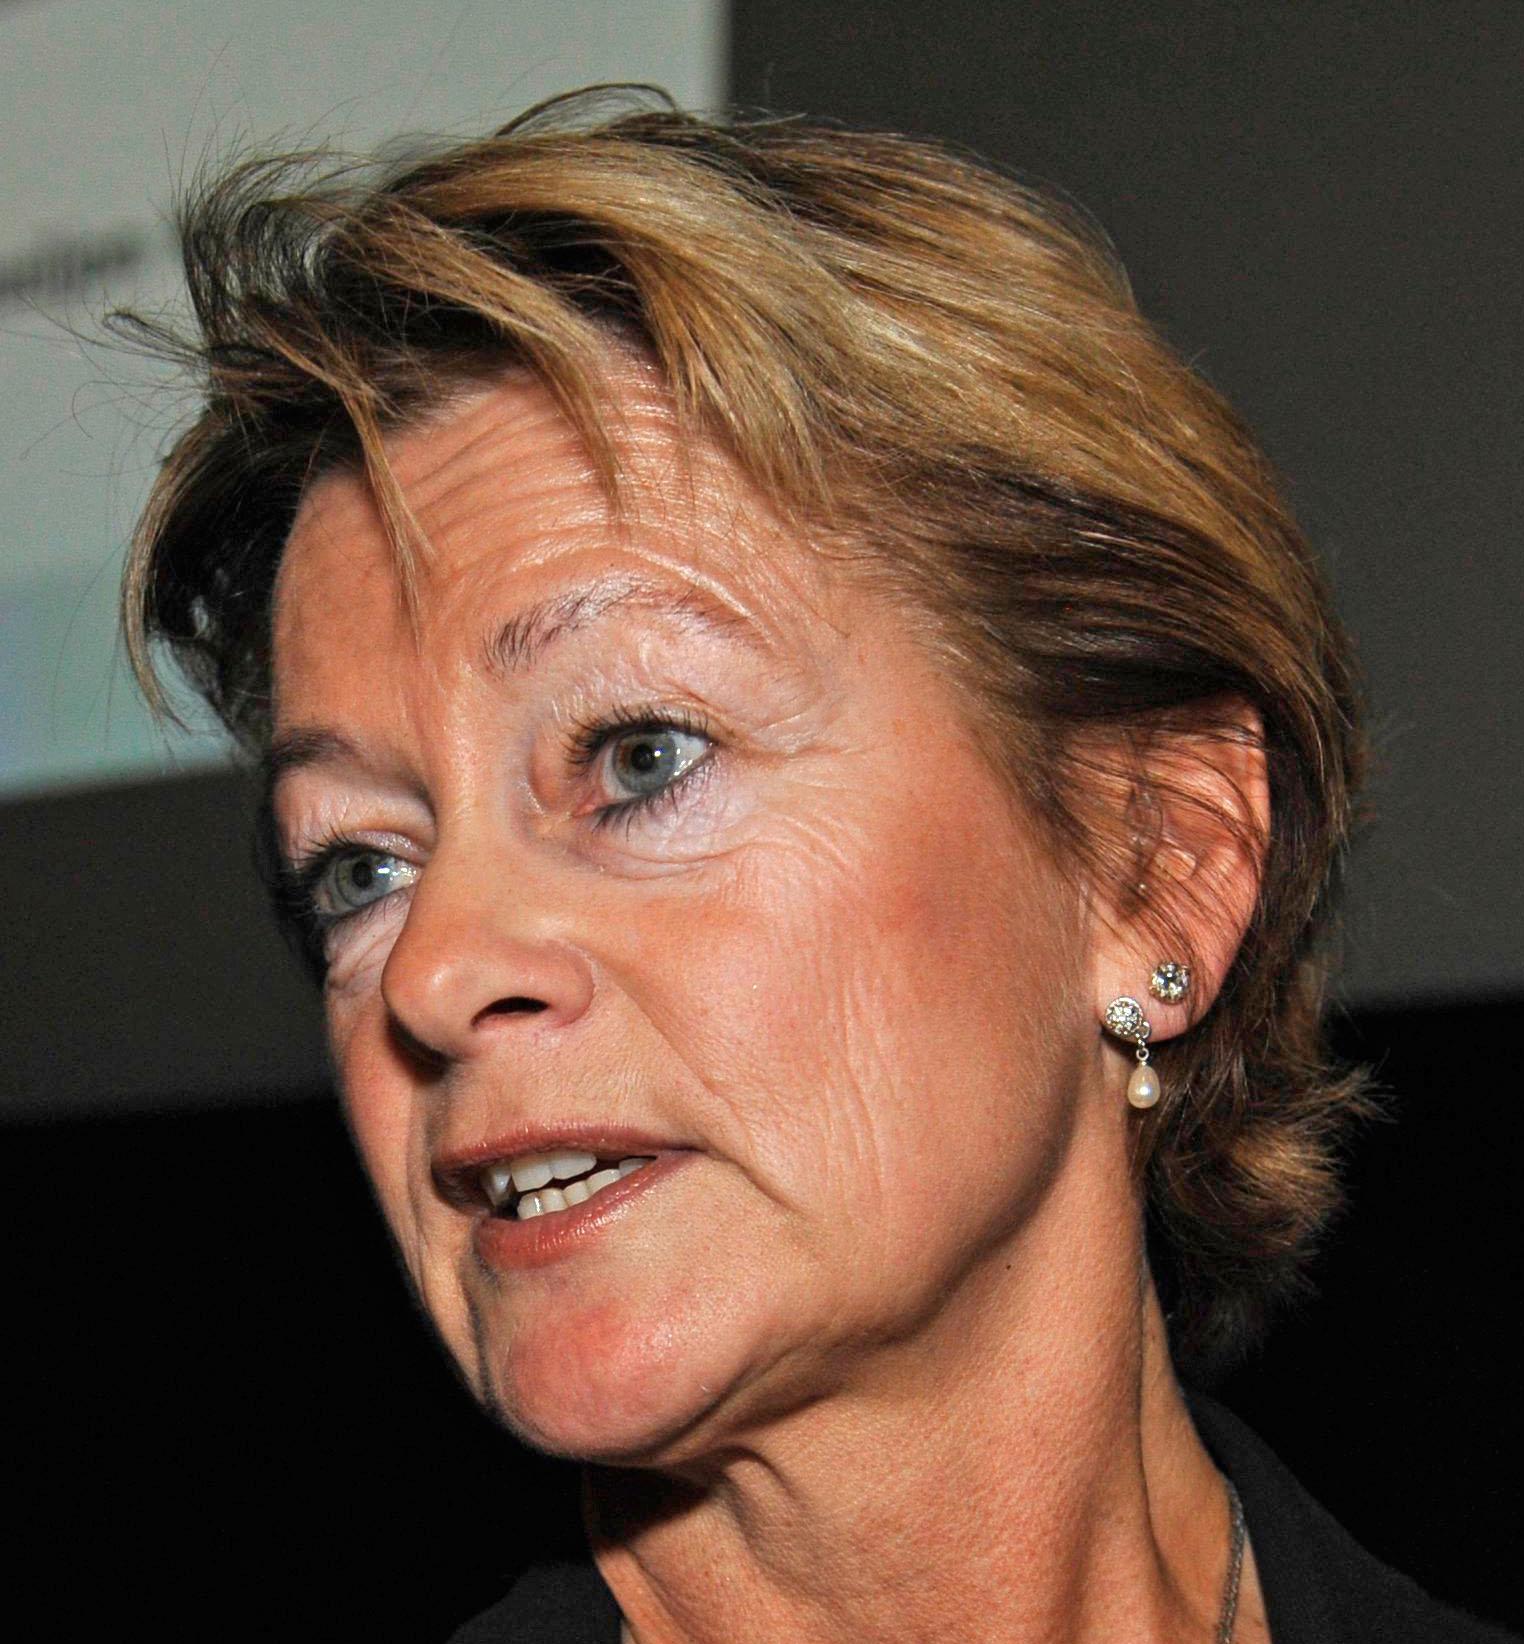 Kulturminister Lena Adelsohn Liljeroth (M):